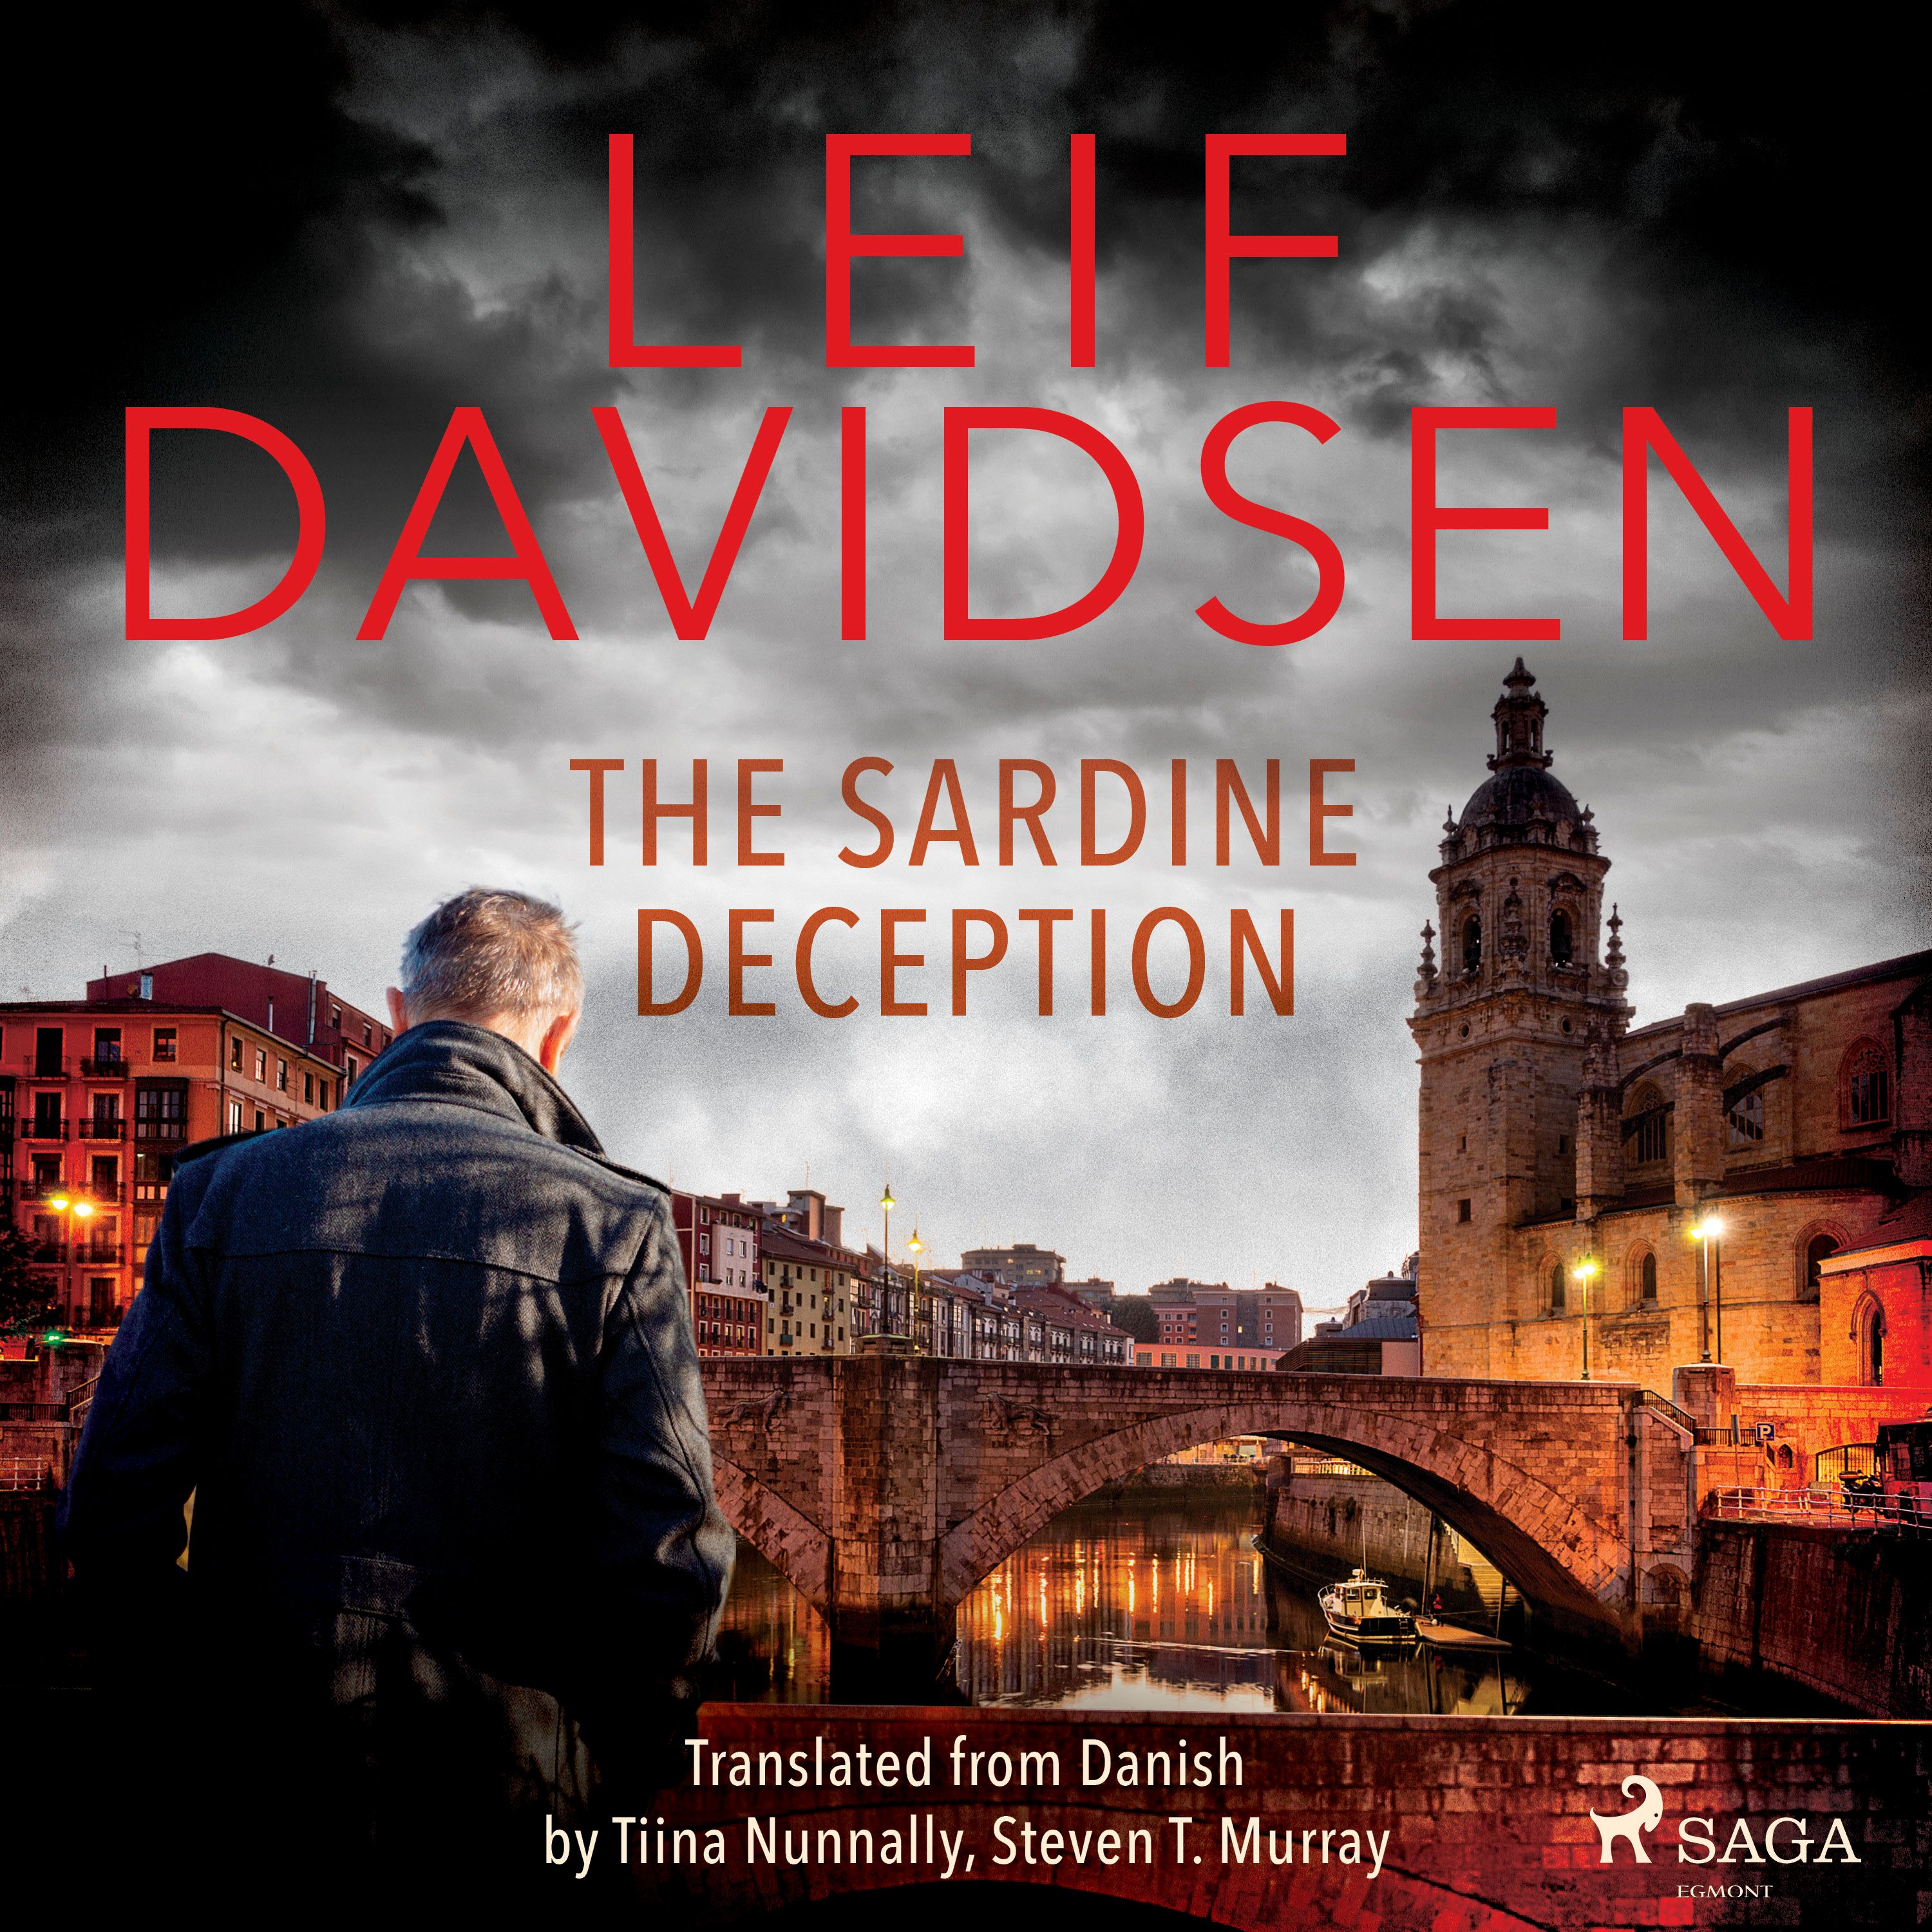 The Sardine Deception, ljudbok av Leif Davidsen